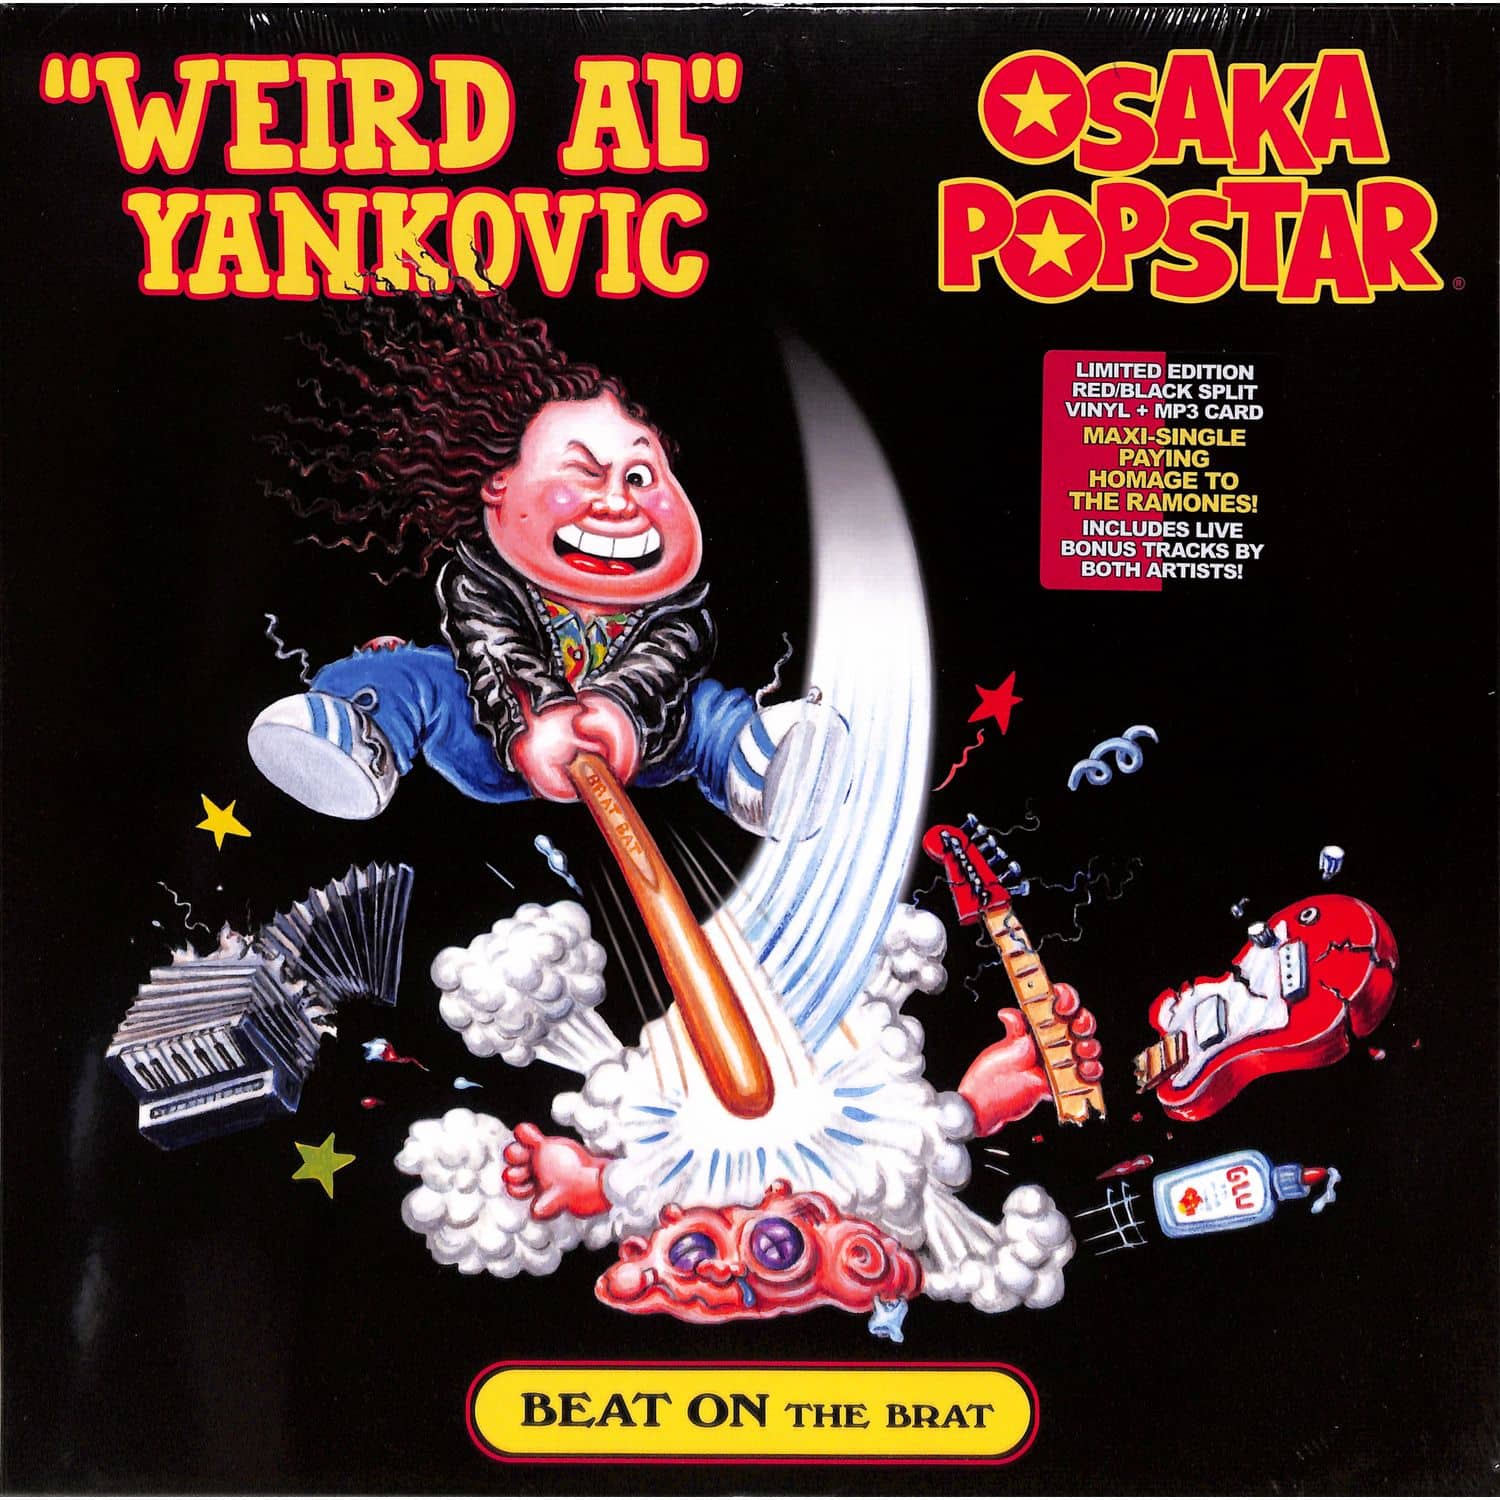 Weird Al Yankovic & Osaka Popstar - BEAT ON THE BRAT 